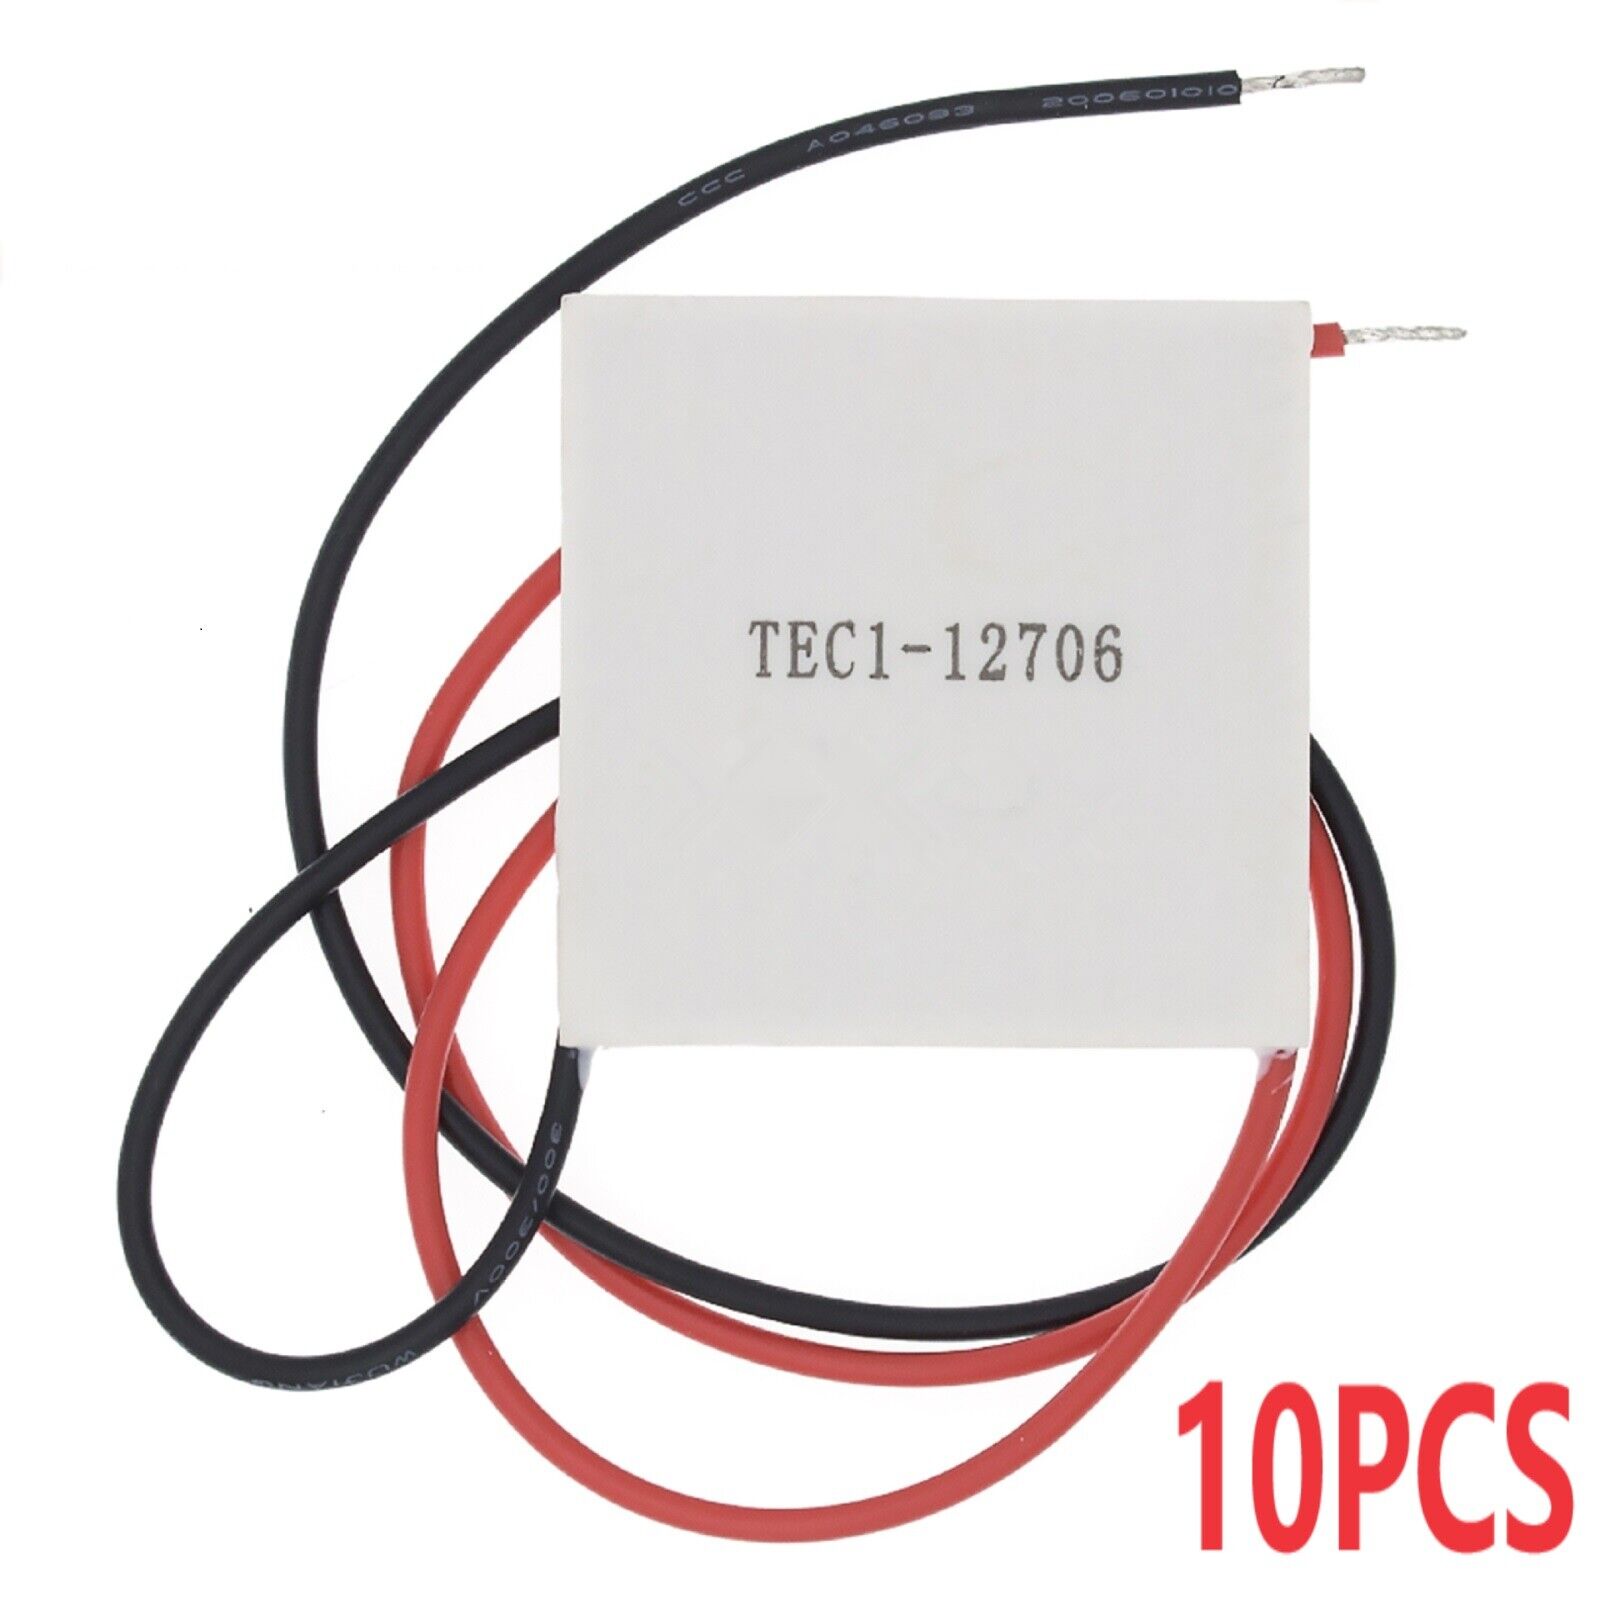 10Pcs TEC1 12706 Heatsink Thermoelectric Cooler Cooling Peltier Plate 12V 30W